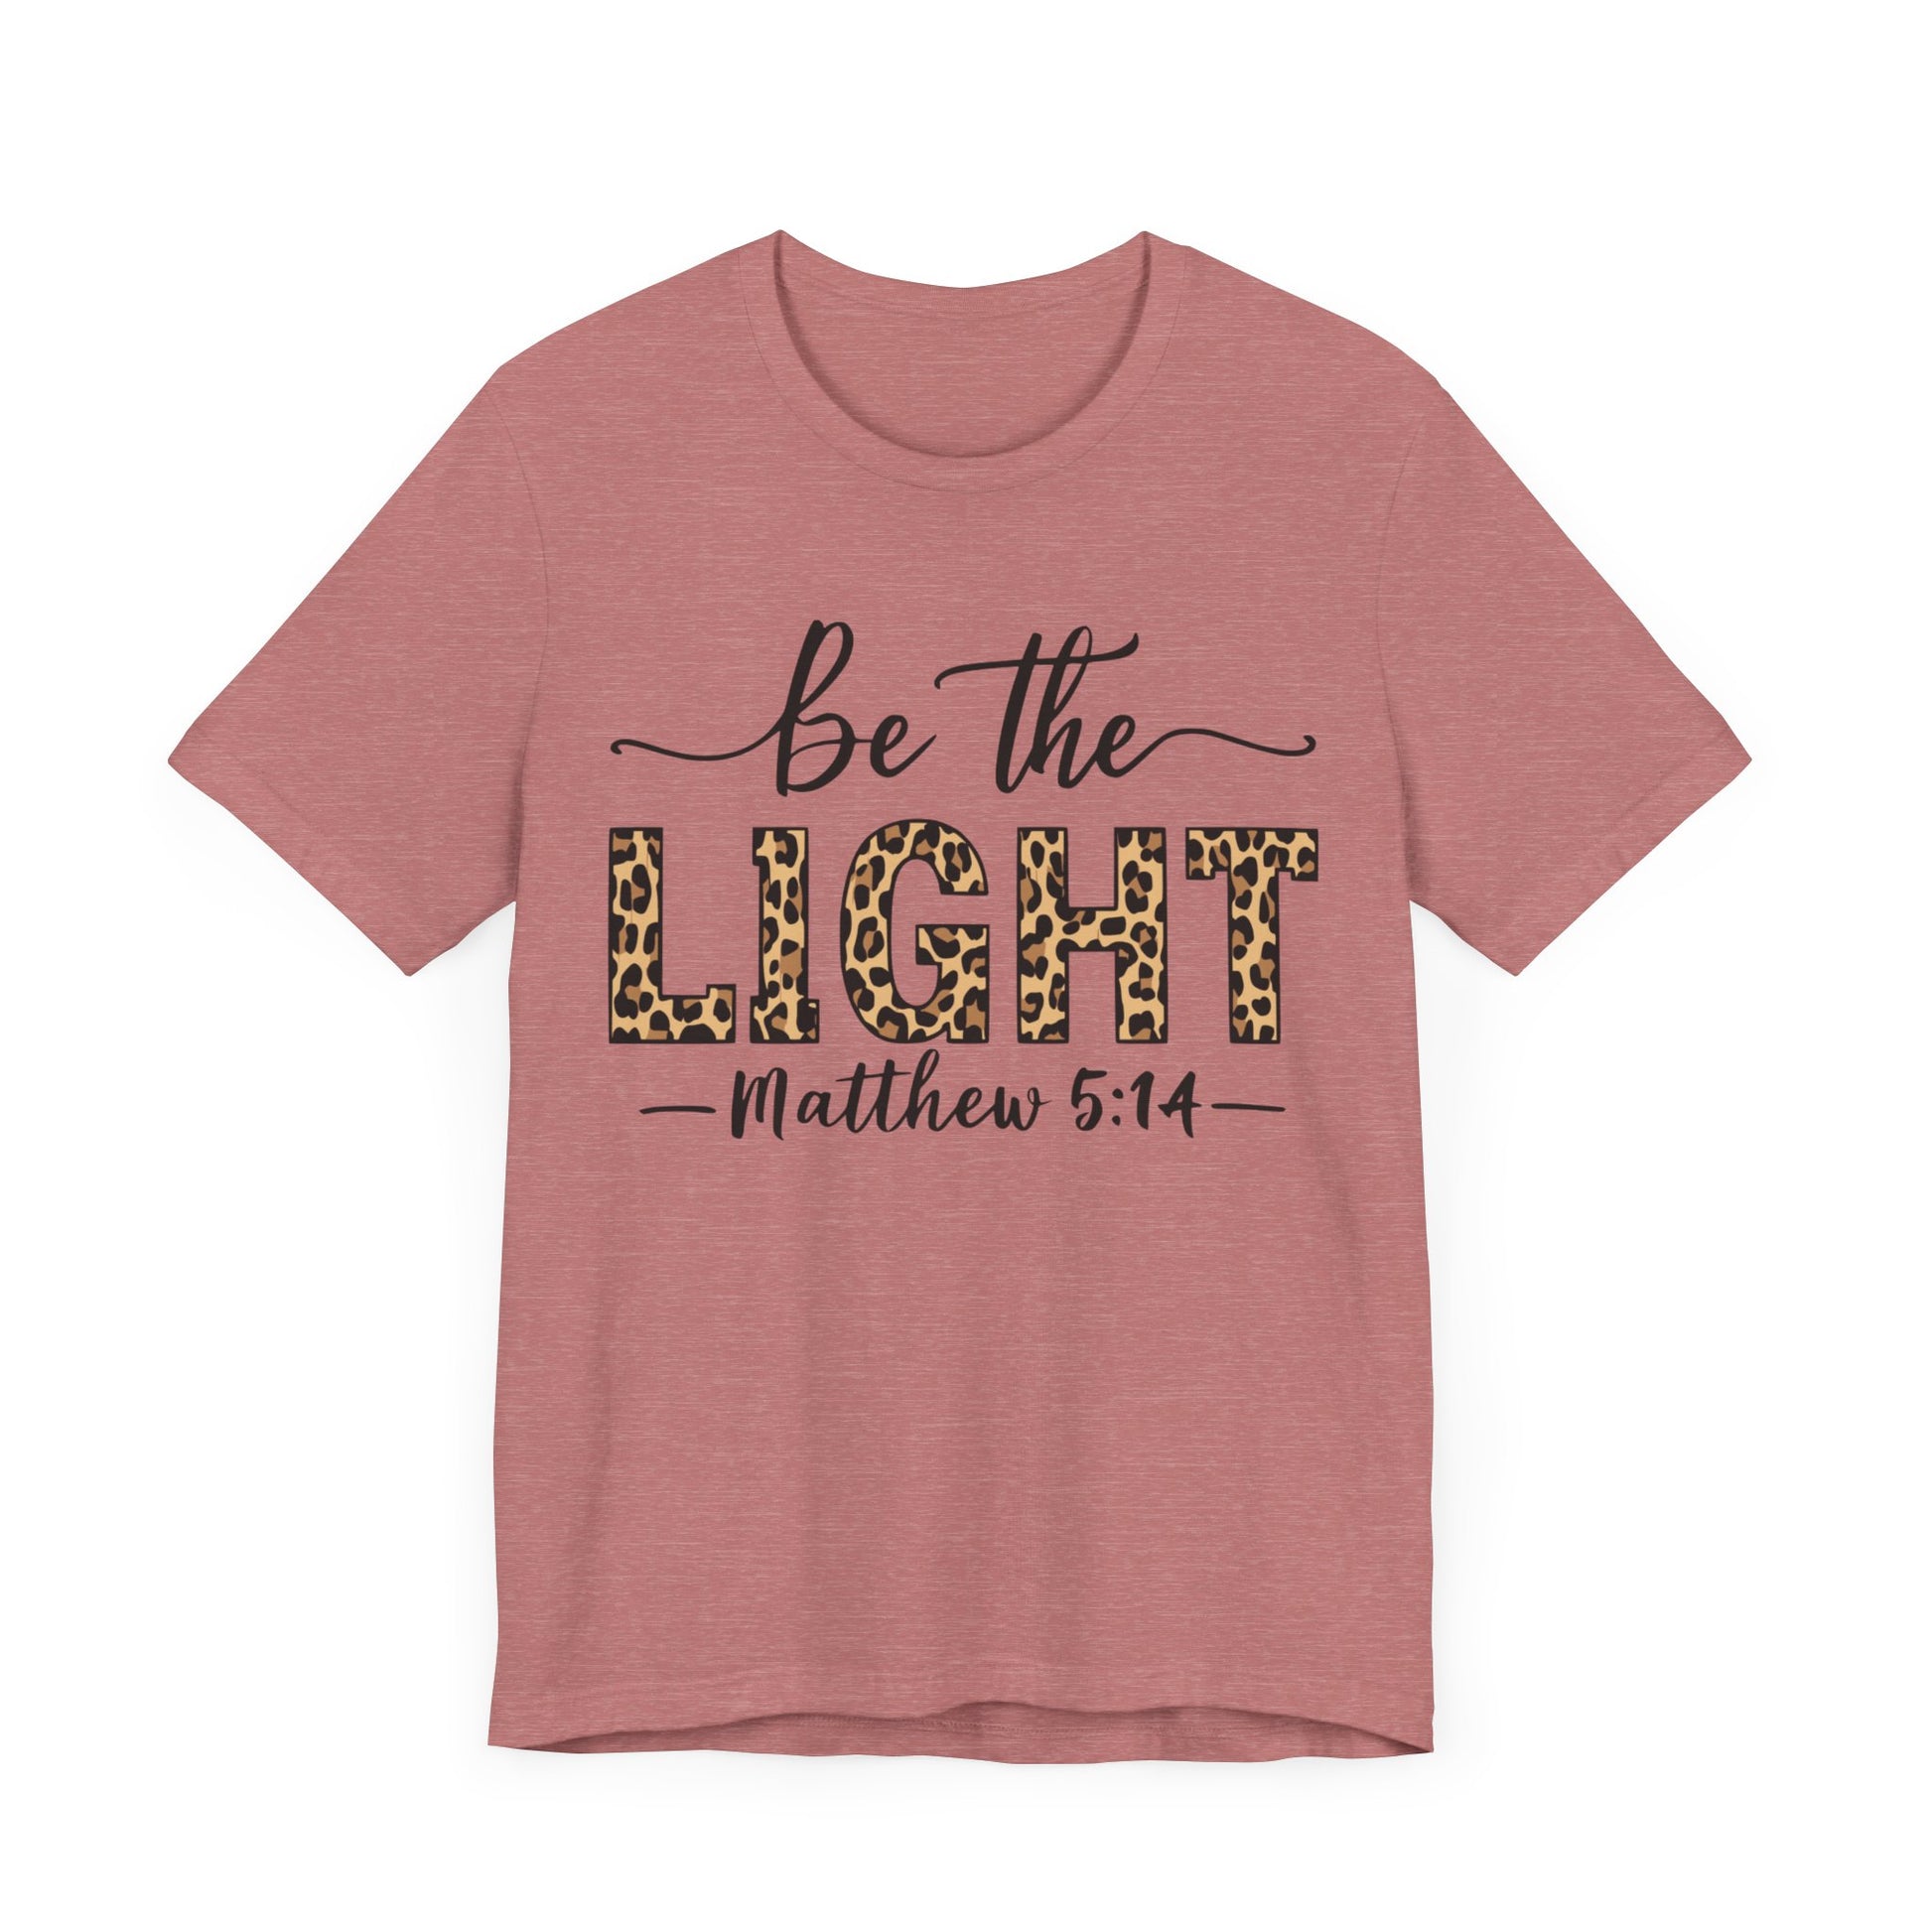 "Matthew 5:14 Scripture T-Shirt with Animal Print Design"